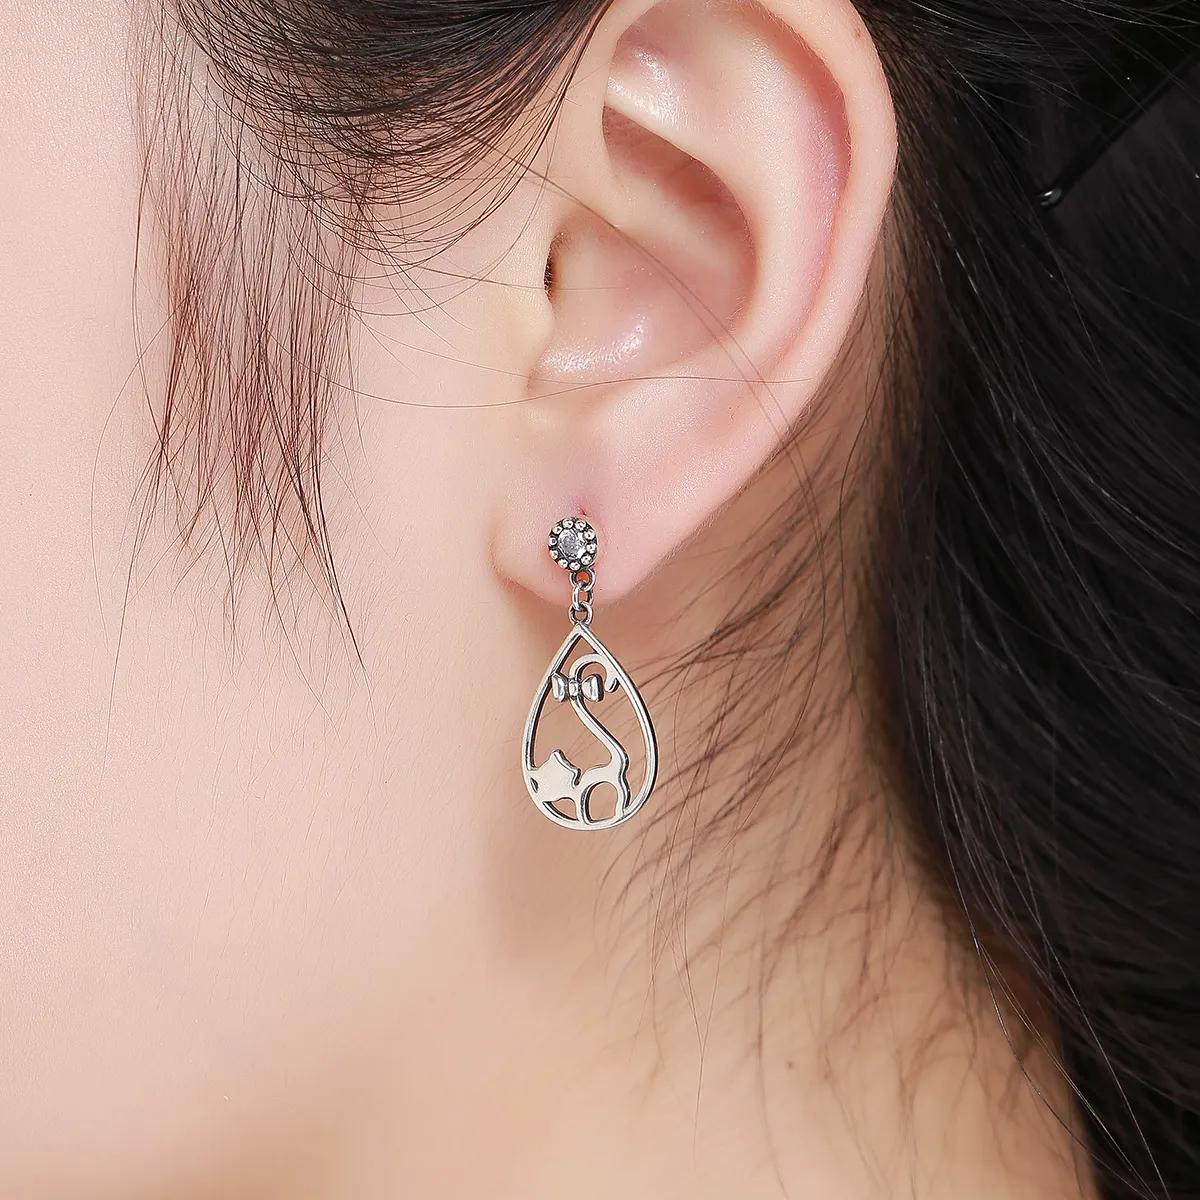 Pandora Style Silver Miss Kitty Hanging Earrings - SCE365